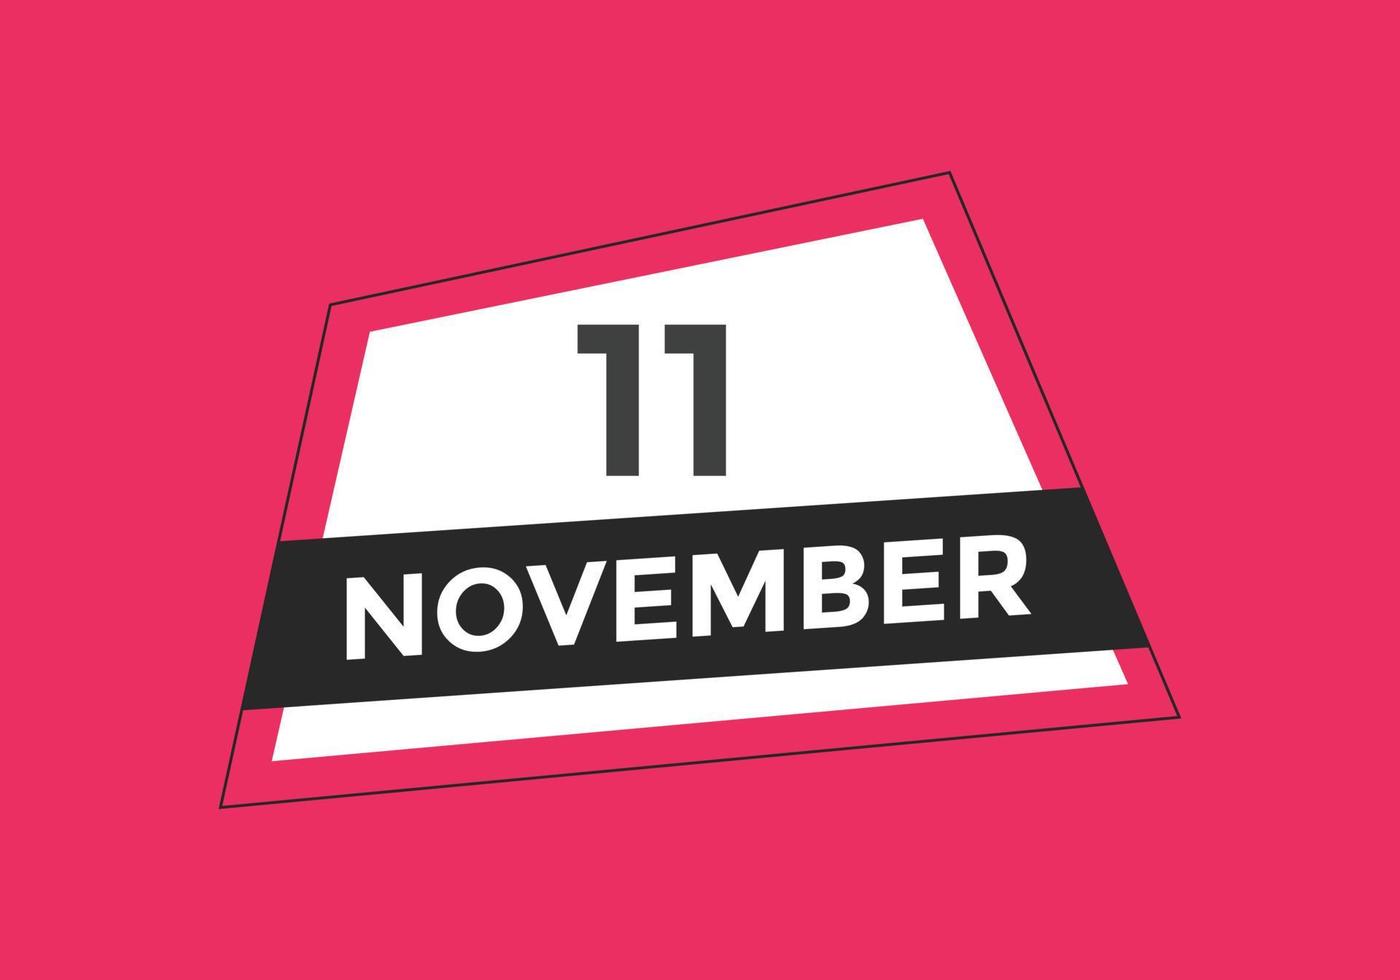 11. November Kalendererinnerung. 11. november tägliche kalendersymbolvorlage. Kalender 11. November Icon-Design-Vorlage. Vektor-Illustration vektor